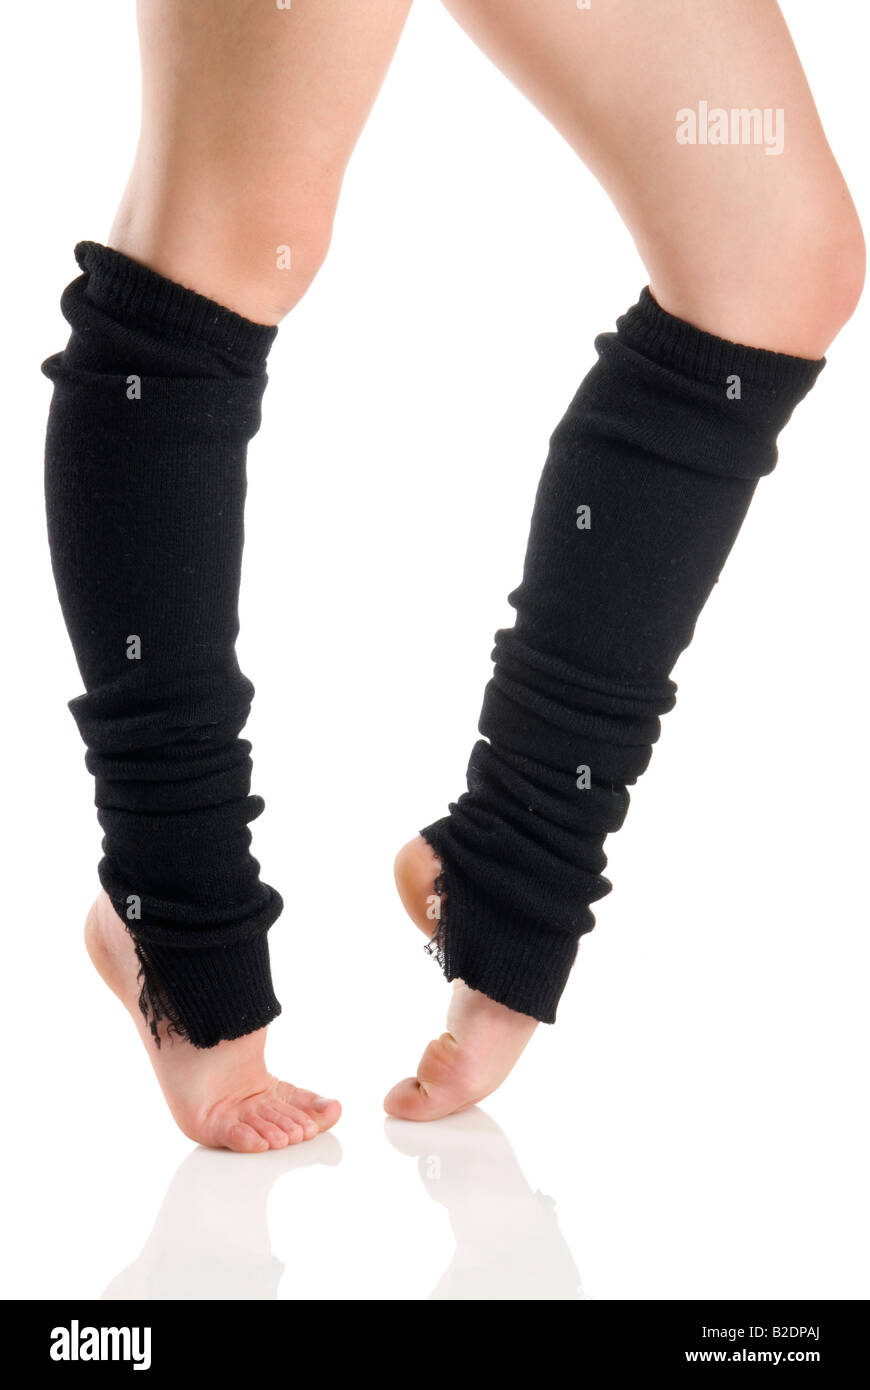 legs in black knee socks warming up Stock Photo